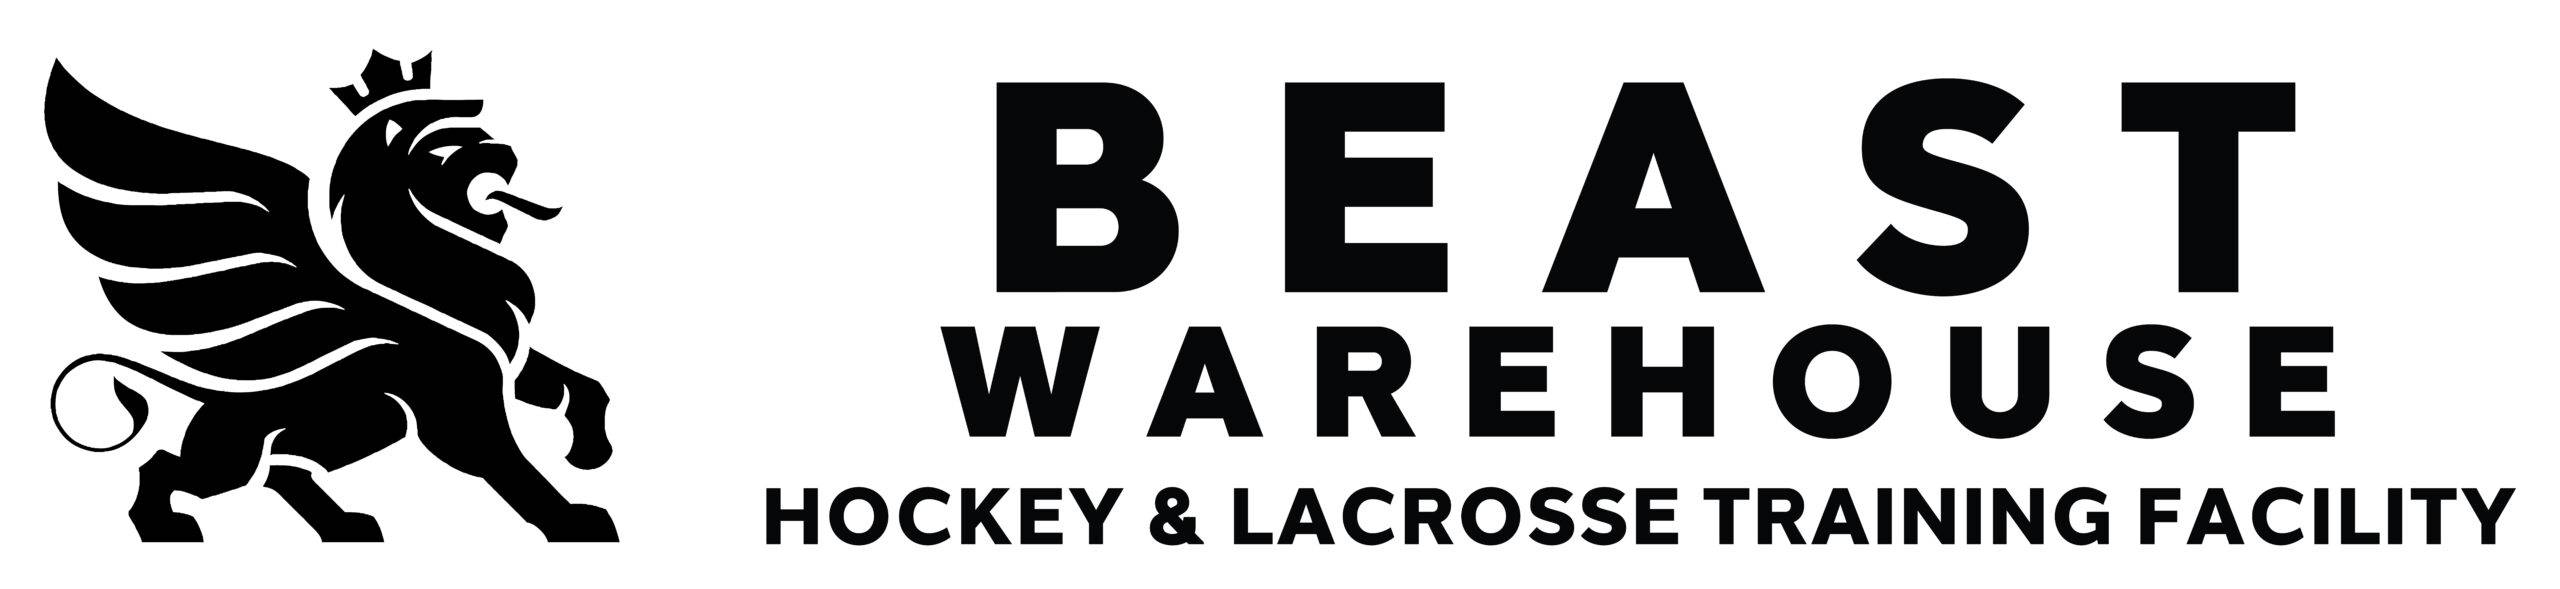 BEAST Warehouse Hockey and Lacrosse Training Facility